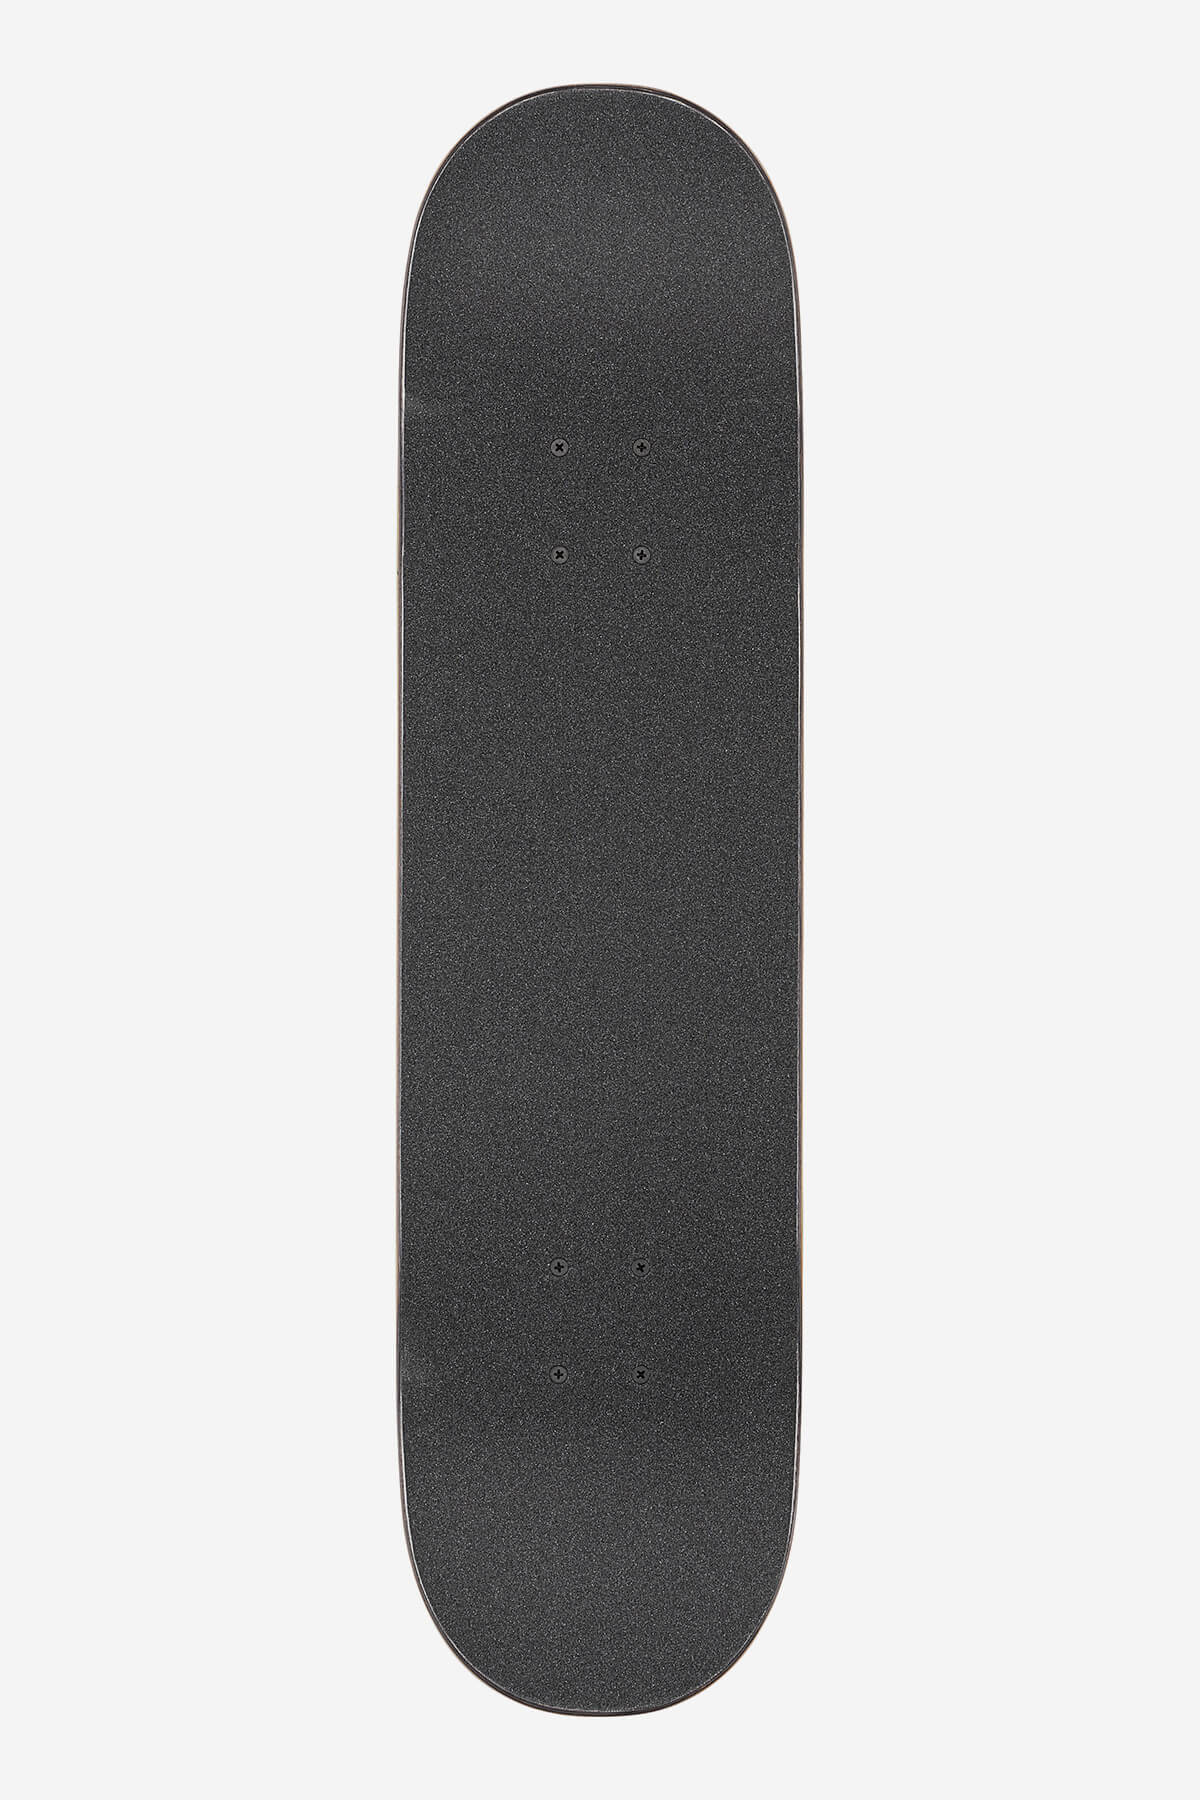 Globe - G1 Natives - Black/Copper - 8.0" Complete Skateboard